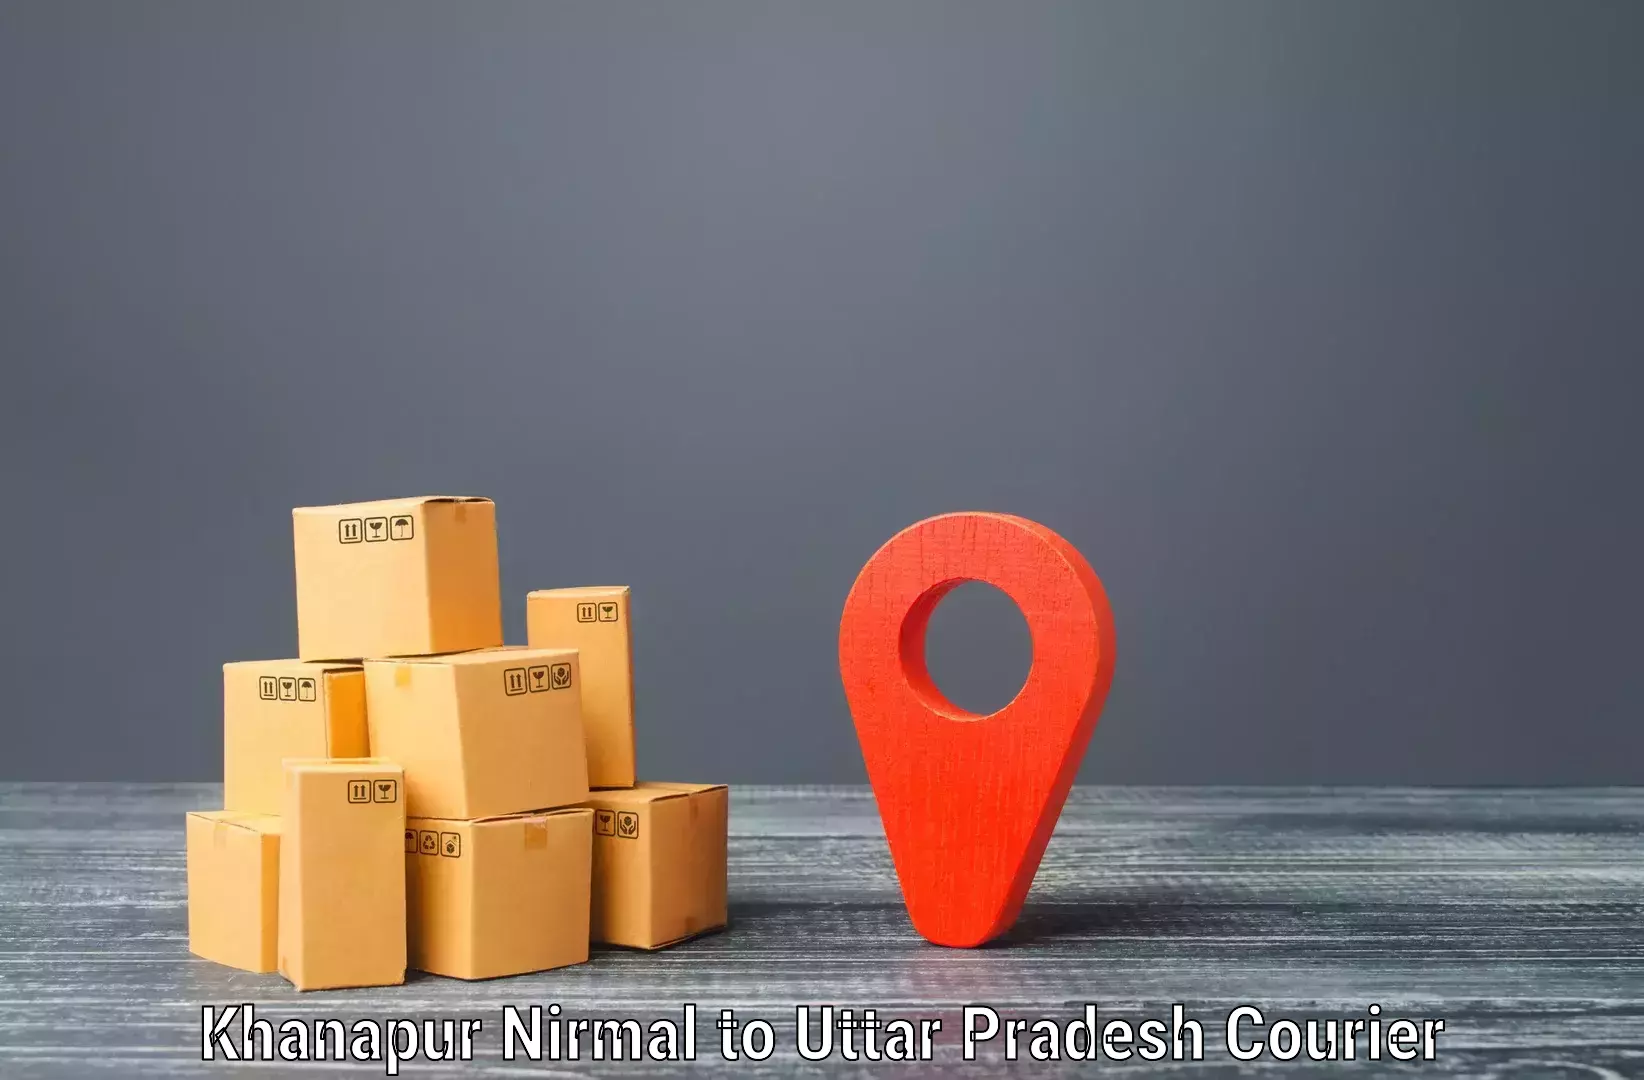 Customer-centric shipping Khanapur Nirmal to Bahraich